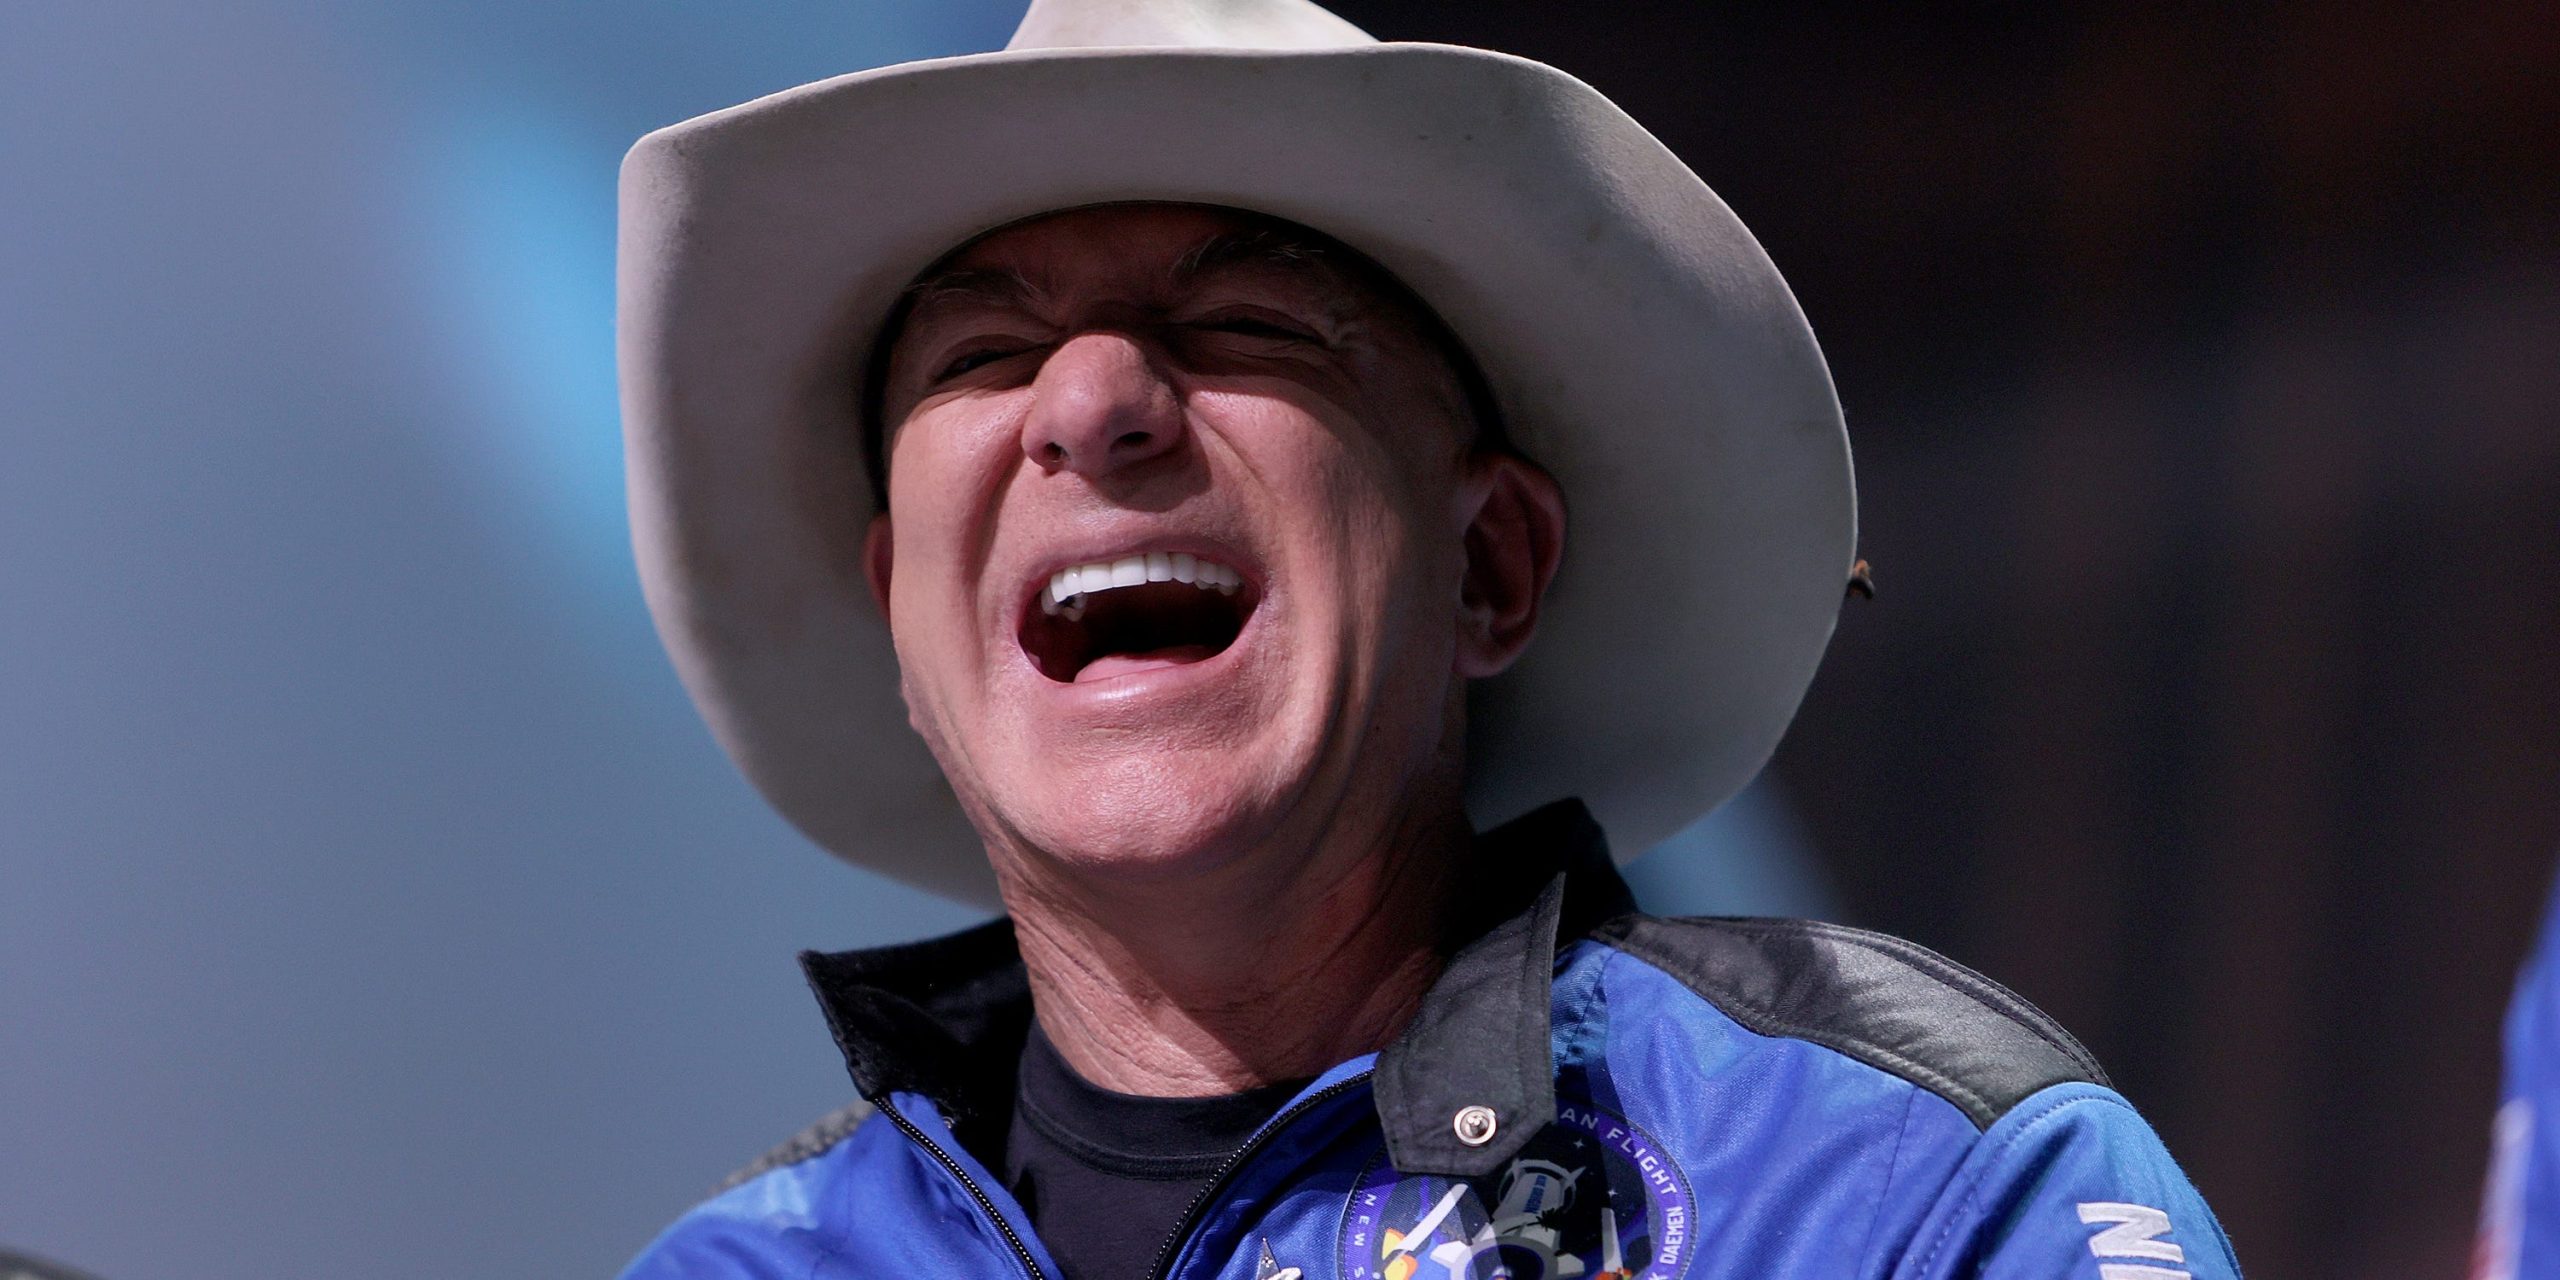 Jeff Bezos laughs wearing a cowboy hat